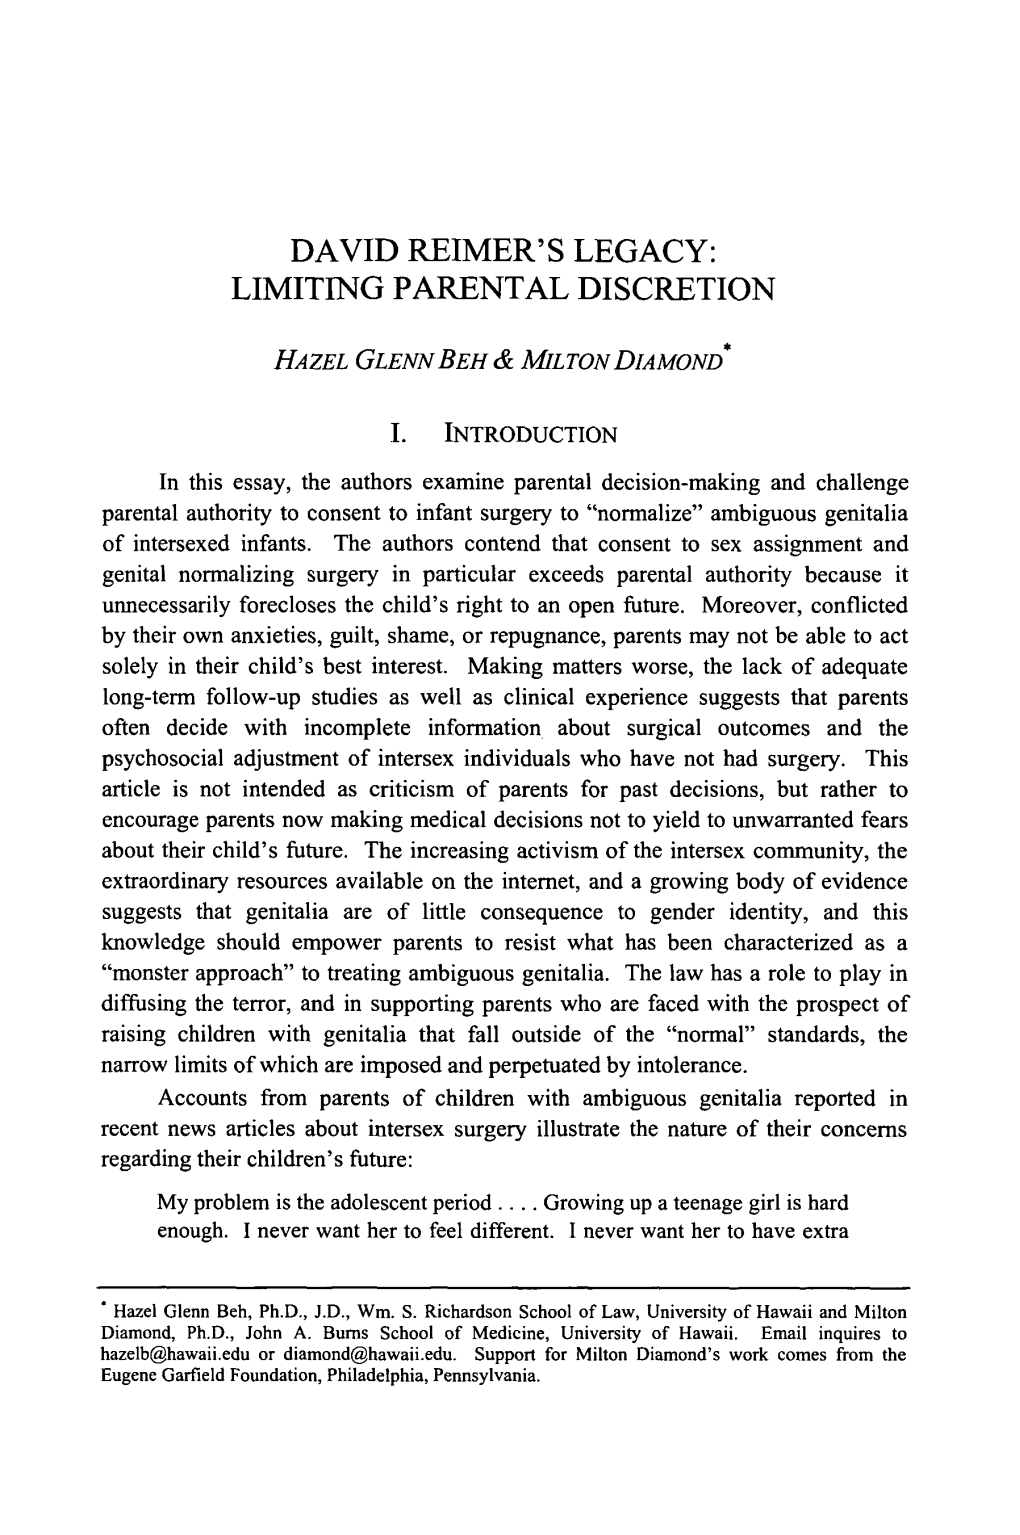 David Reimer's Legacy: Limiting Parental Discretion